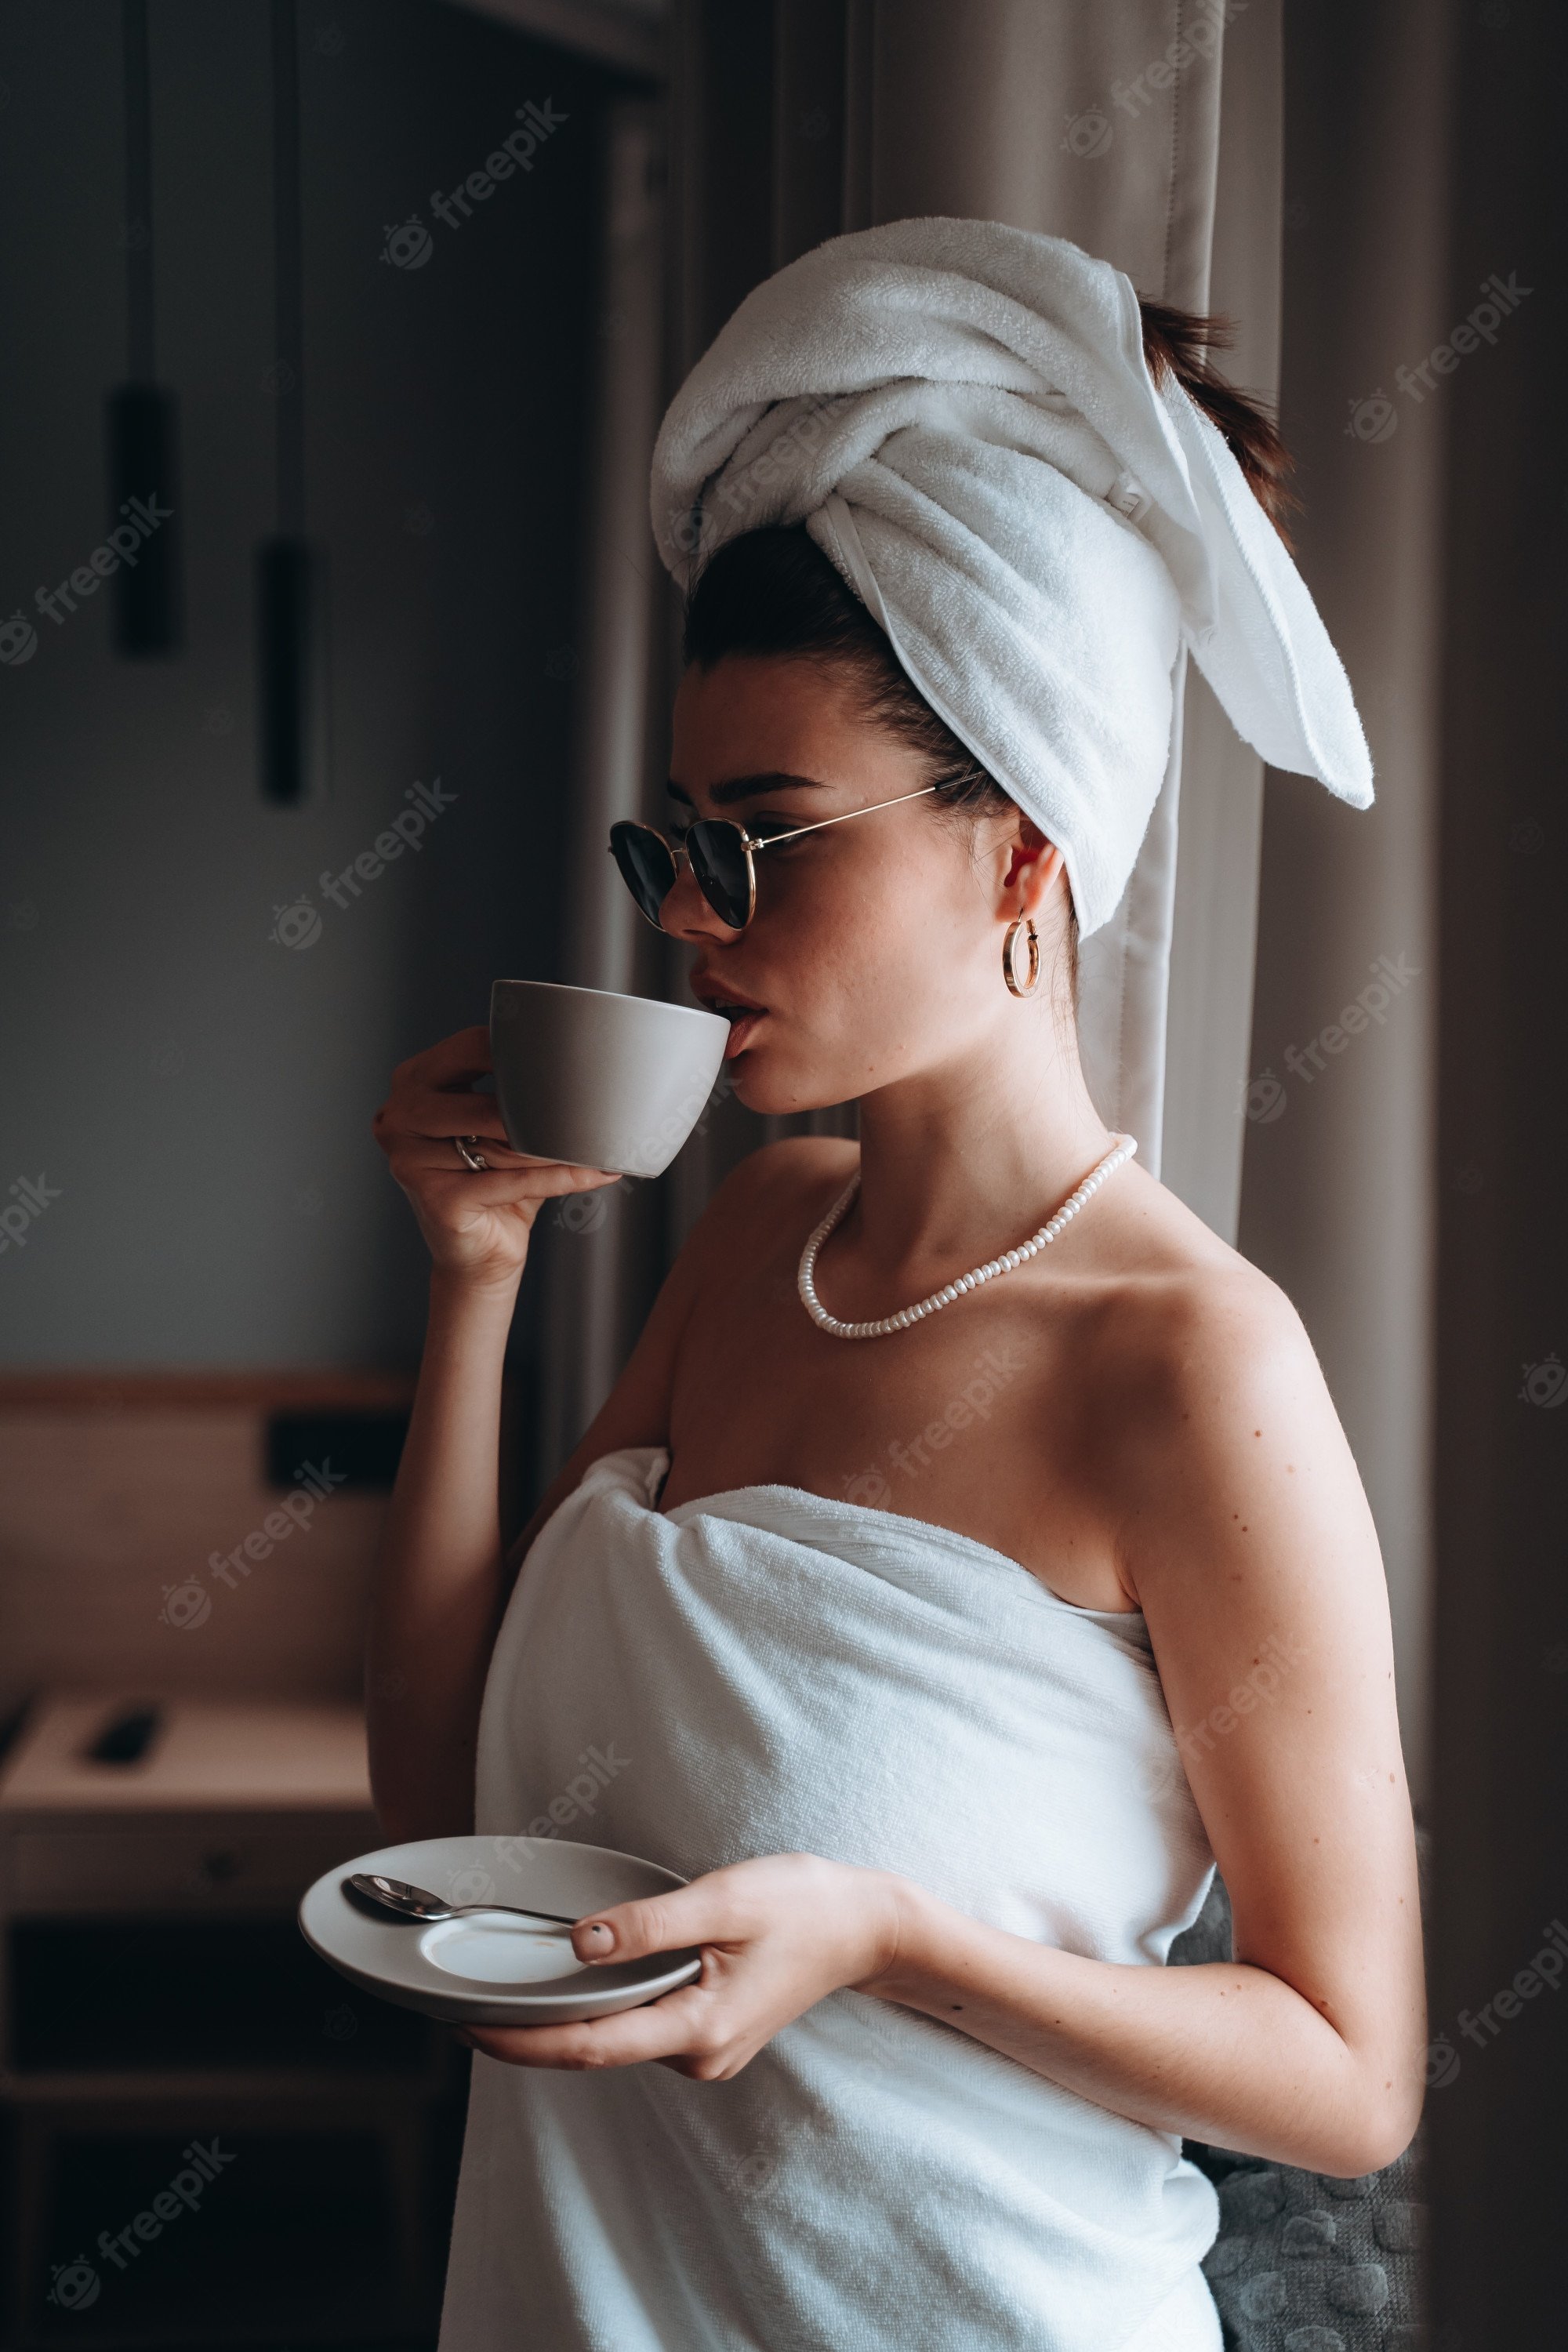 Женщина с полотенцем на голове. Девушка в полотенце. Фотосессия в полотенце. Фотосессия полотенце девушка.